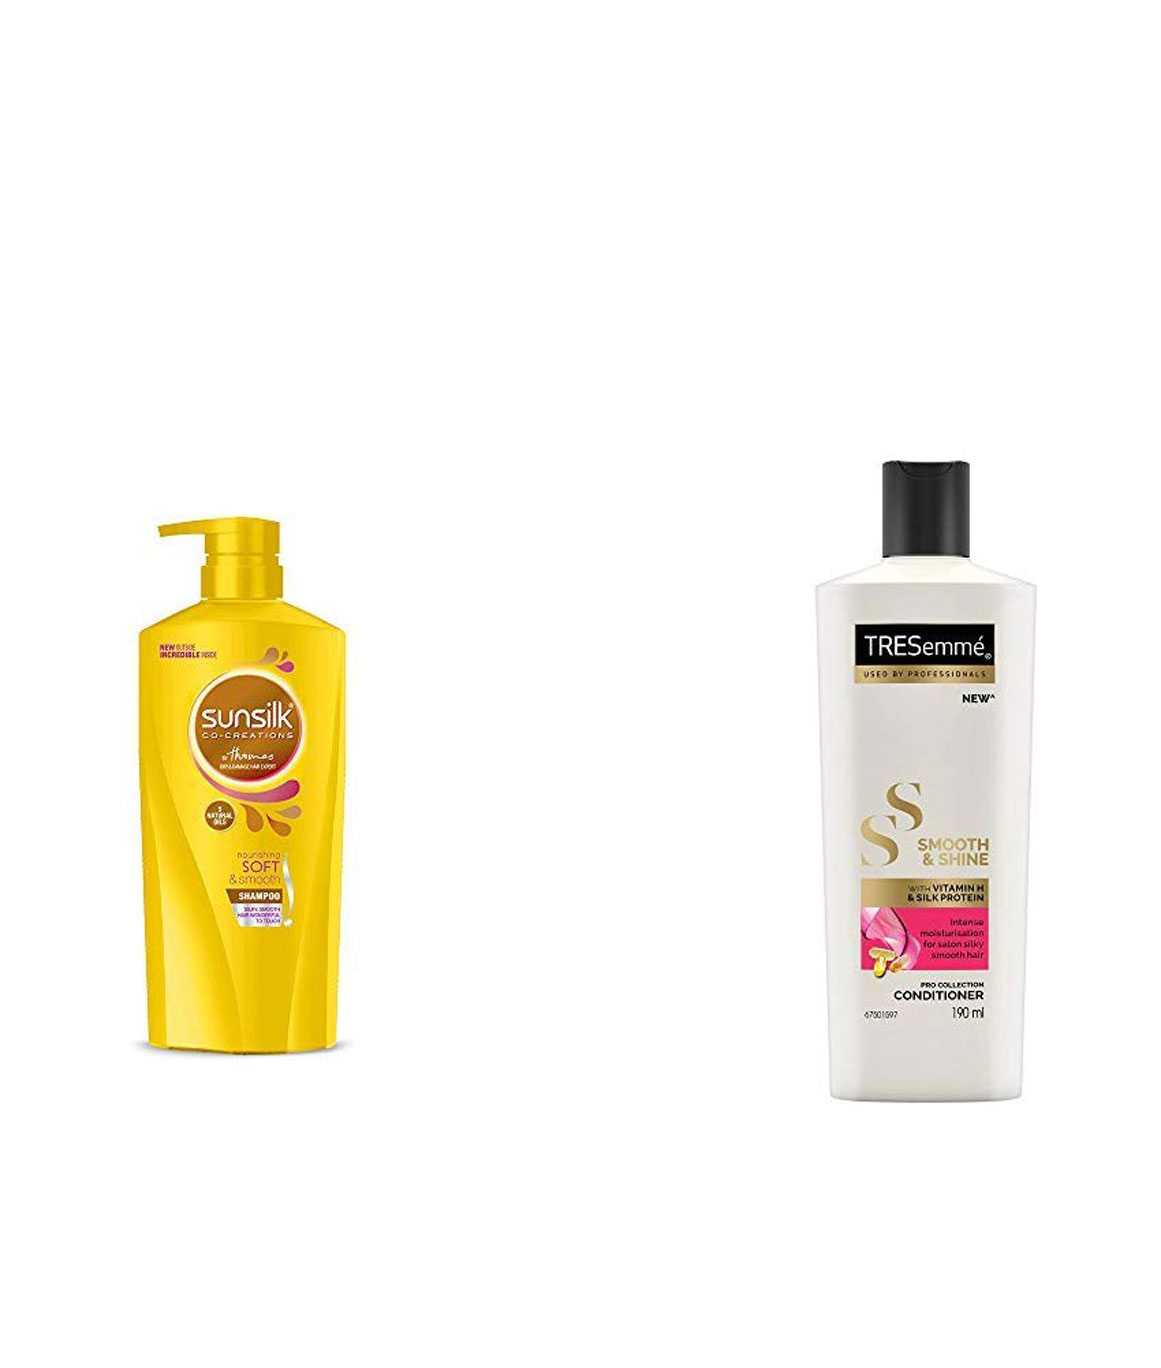 Sunsilk Nourishing Soft & Smooth Shampoo 650ml & TRESemme Smooth and Shine Conditioner, 190ml